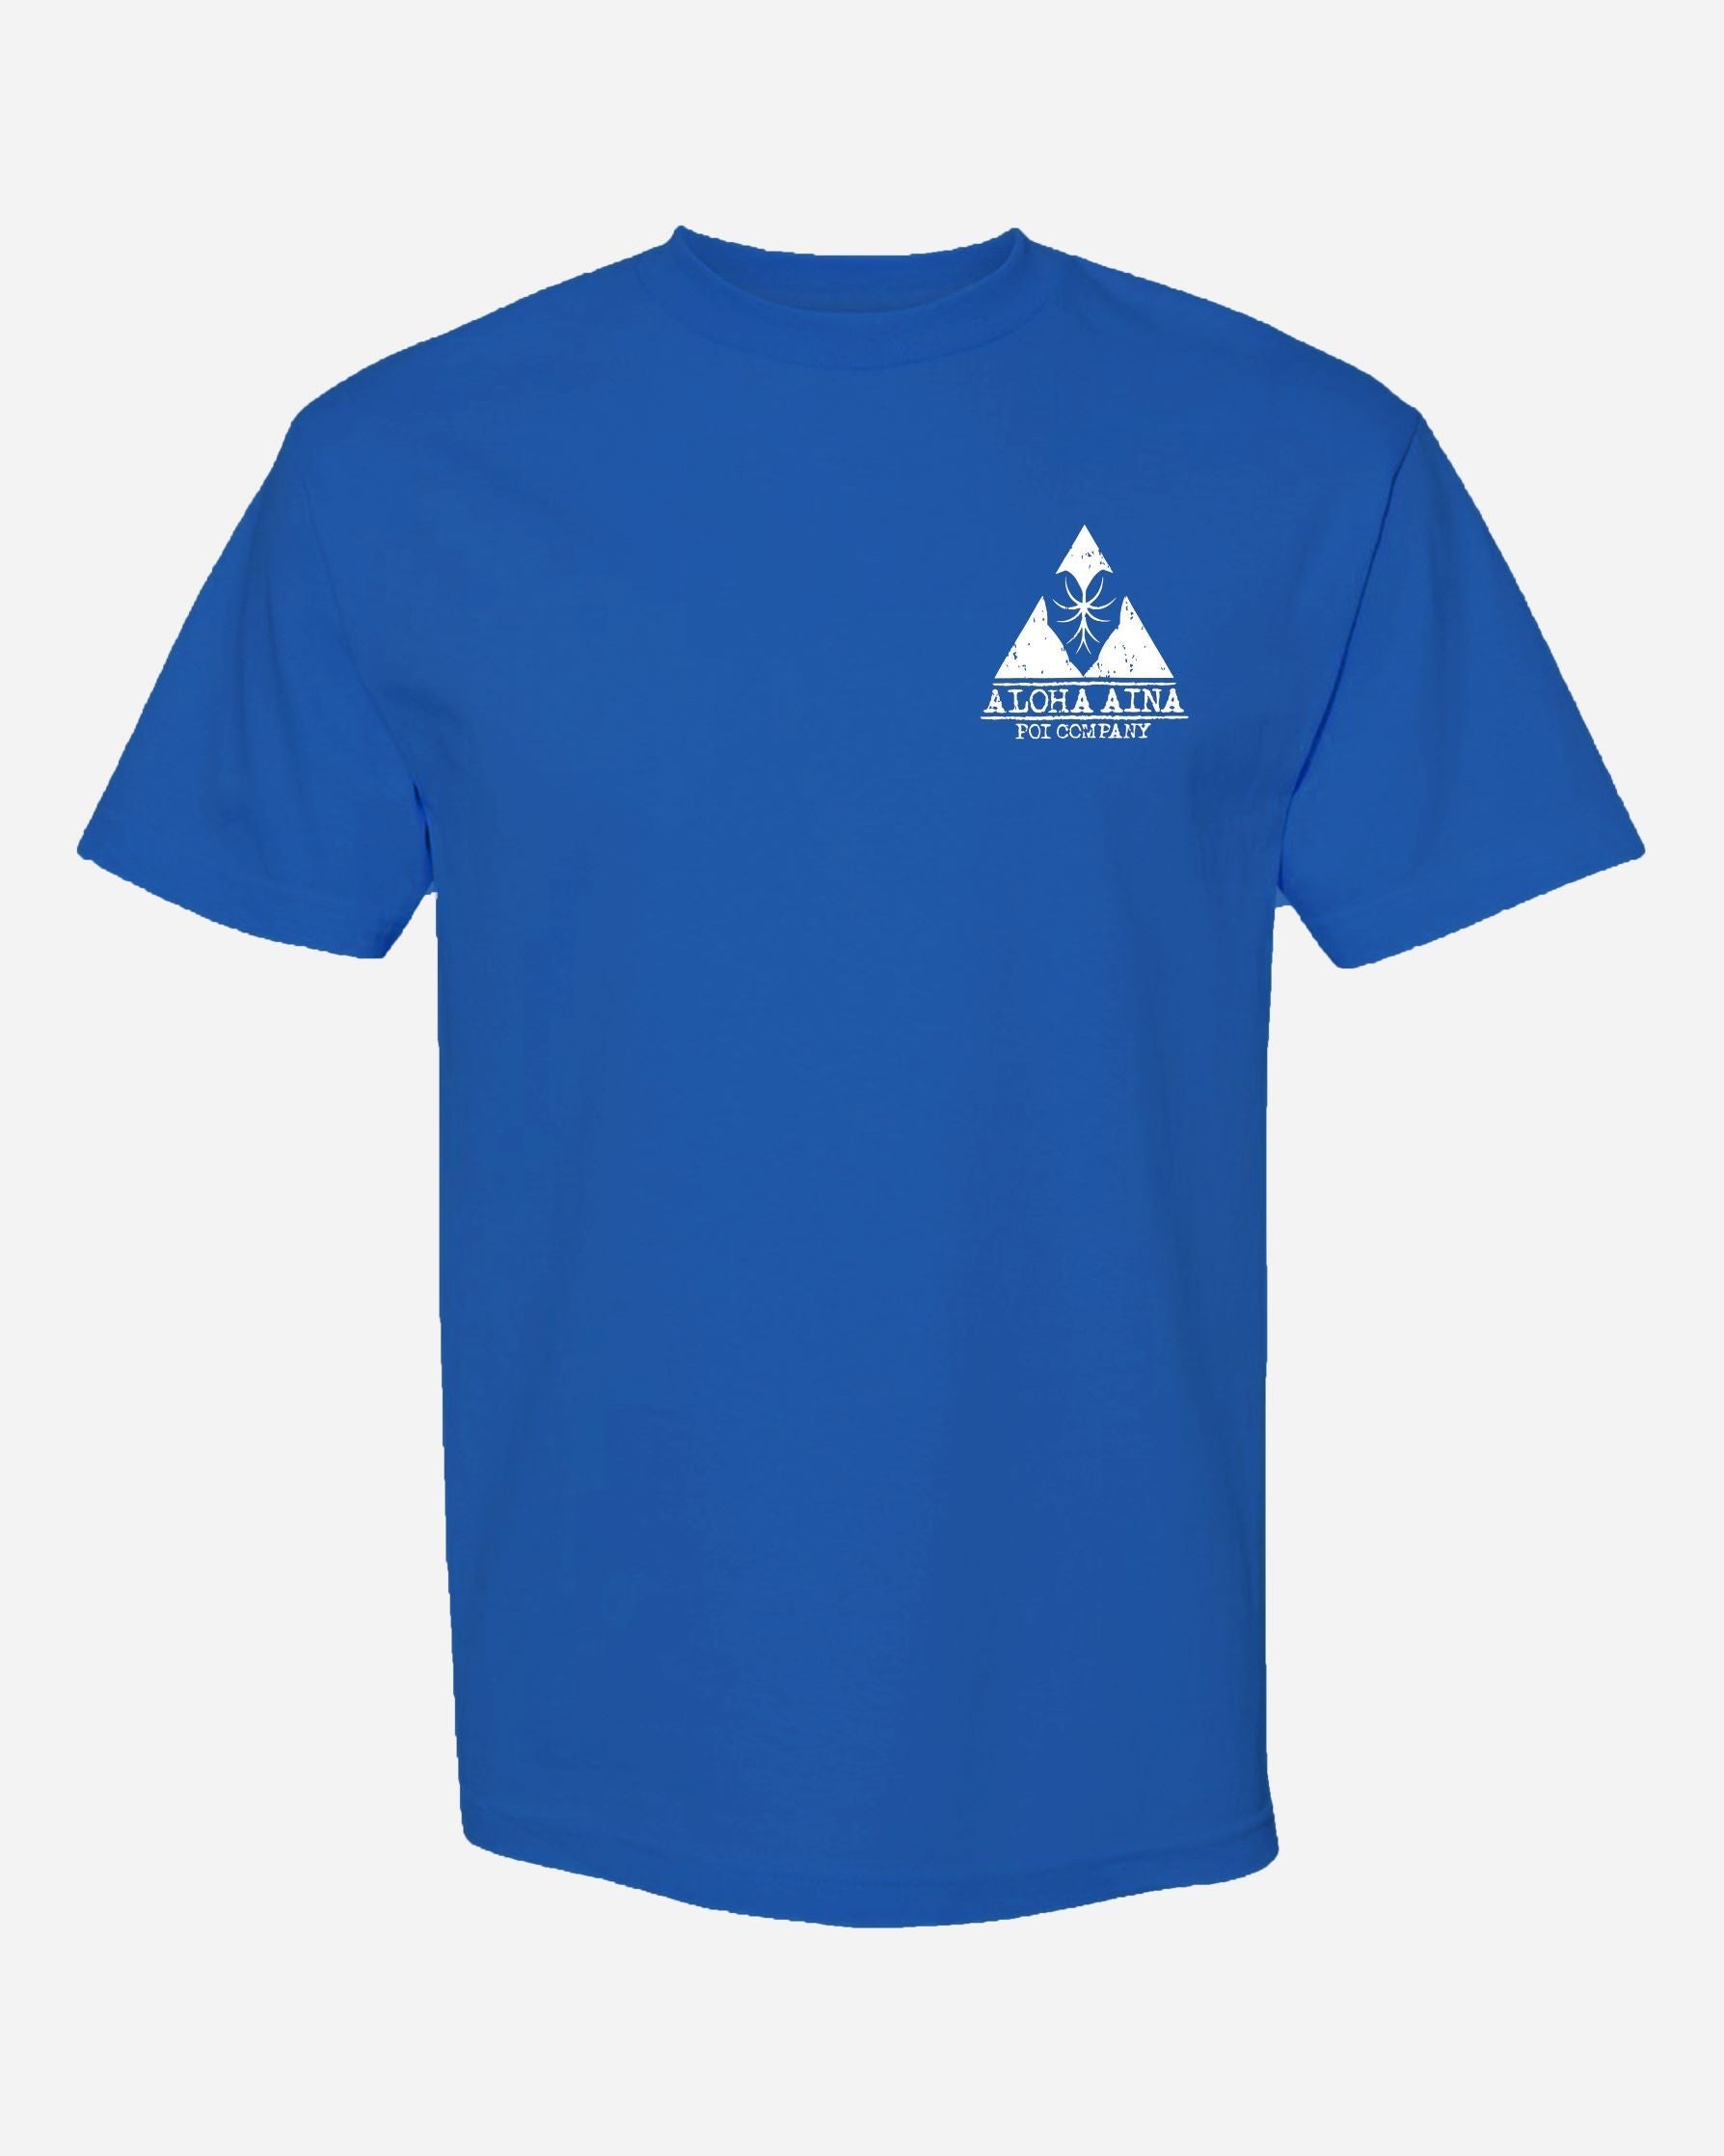 Pop-Up Mākeke - Aloha Aina Poi Co. - Mauka Logo Men's Short Sleeve T-Shirt - Blue - Front View